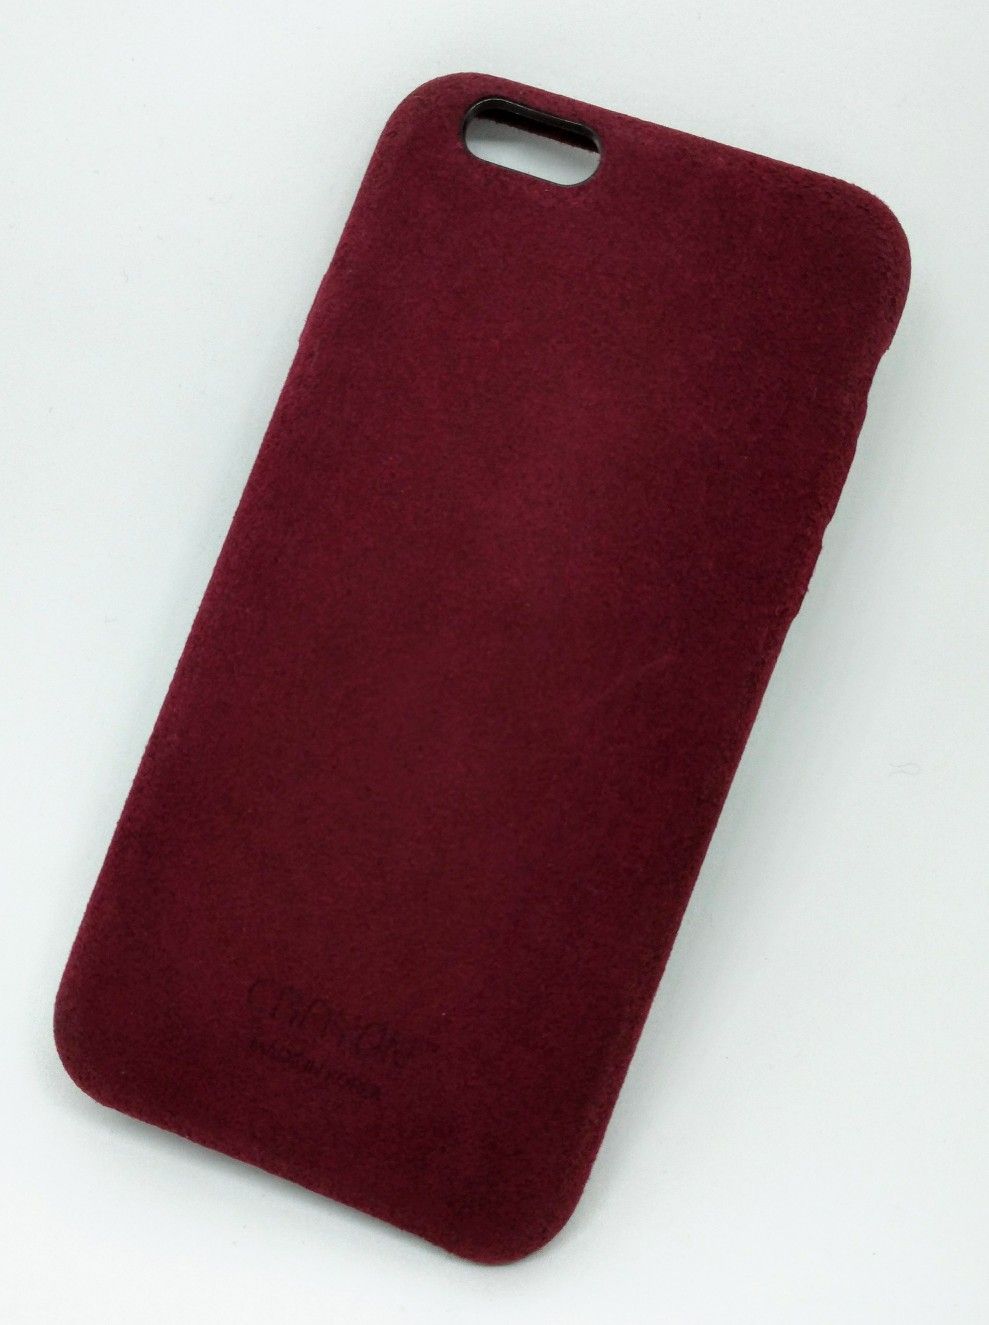 IPhone 6 Cloth Material Case